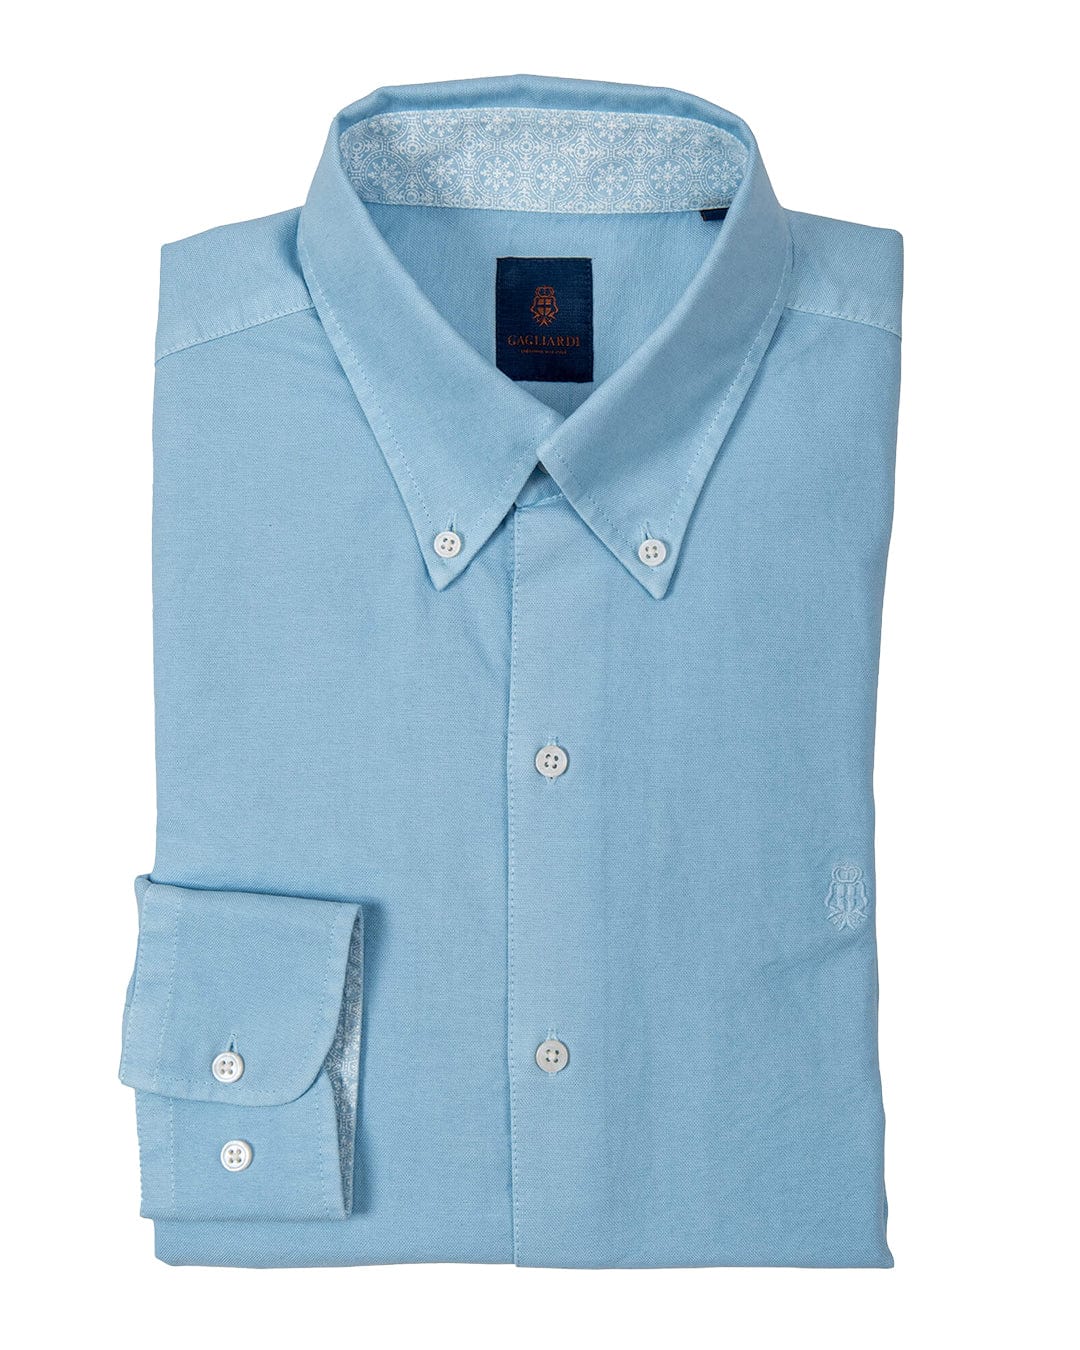 Gagliardi Shirts Gagliardi Sky Tailored Fit Oxford Button-Down Shirt